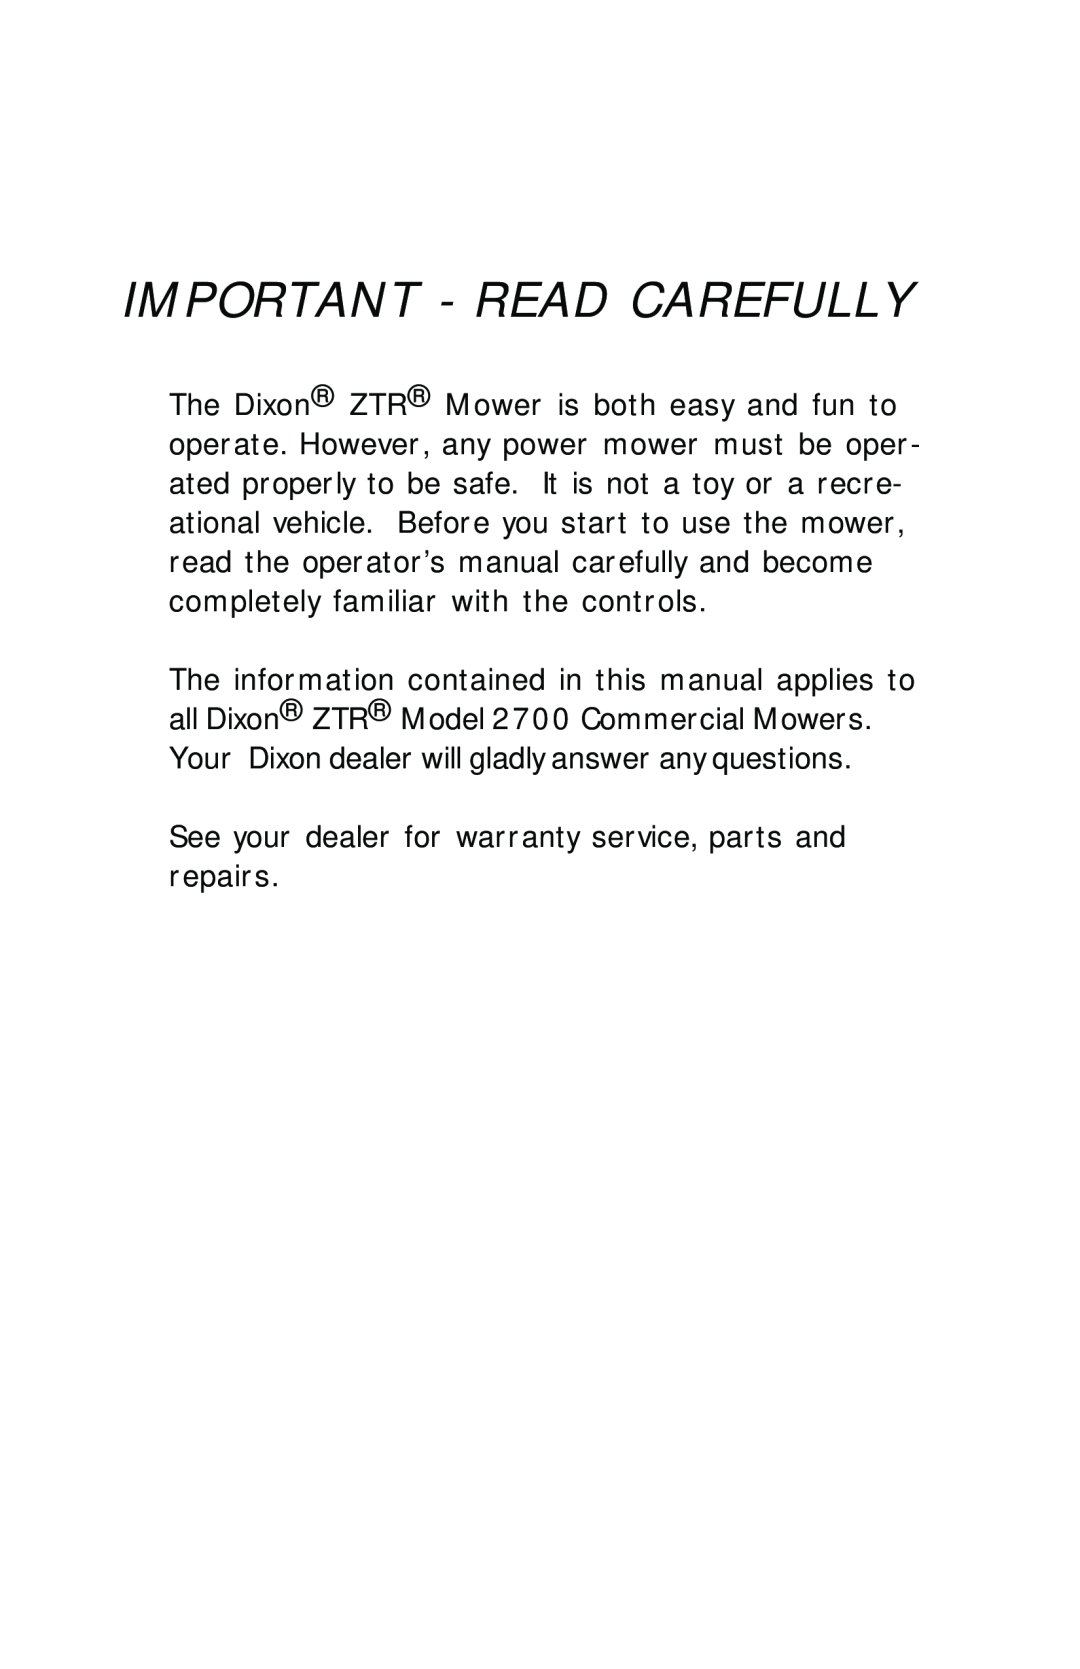 Dixon 2700 manual Important - Read Carefully 